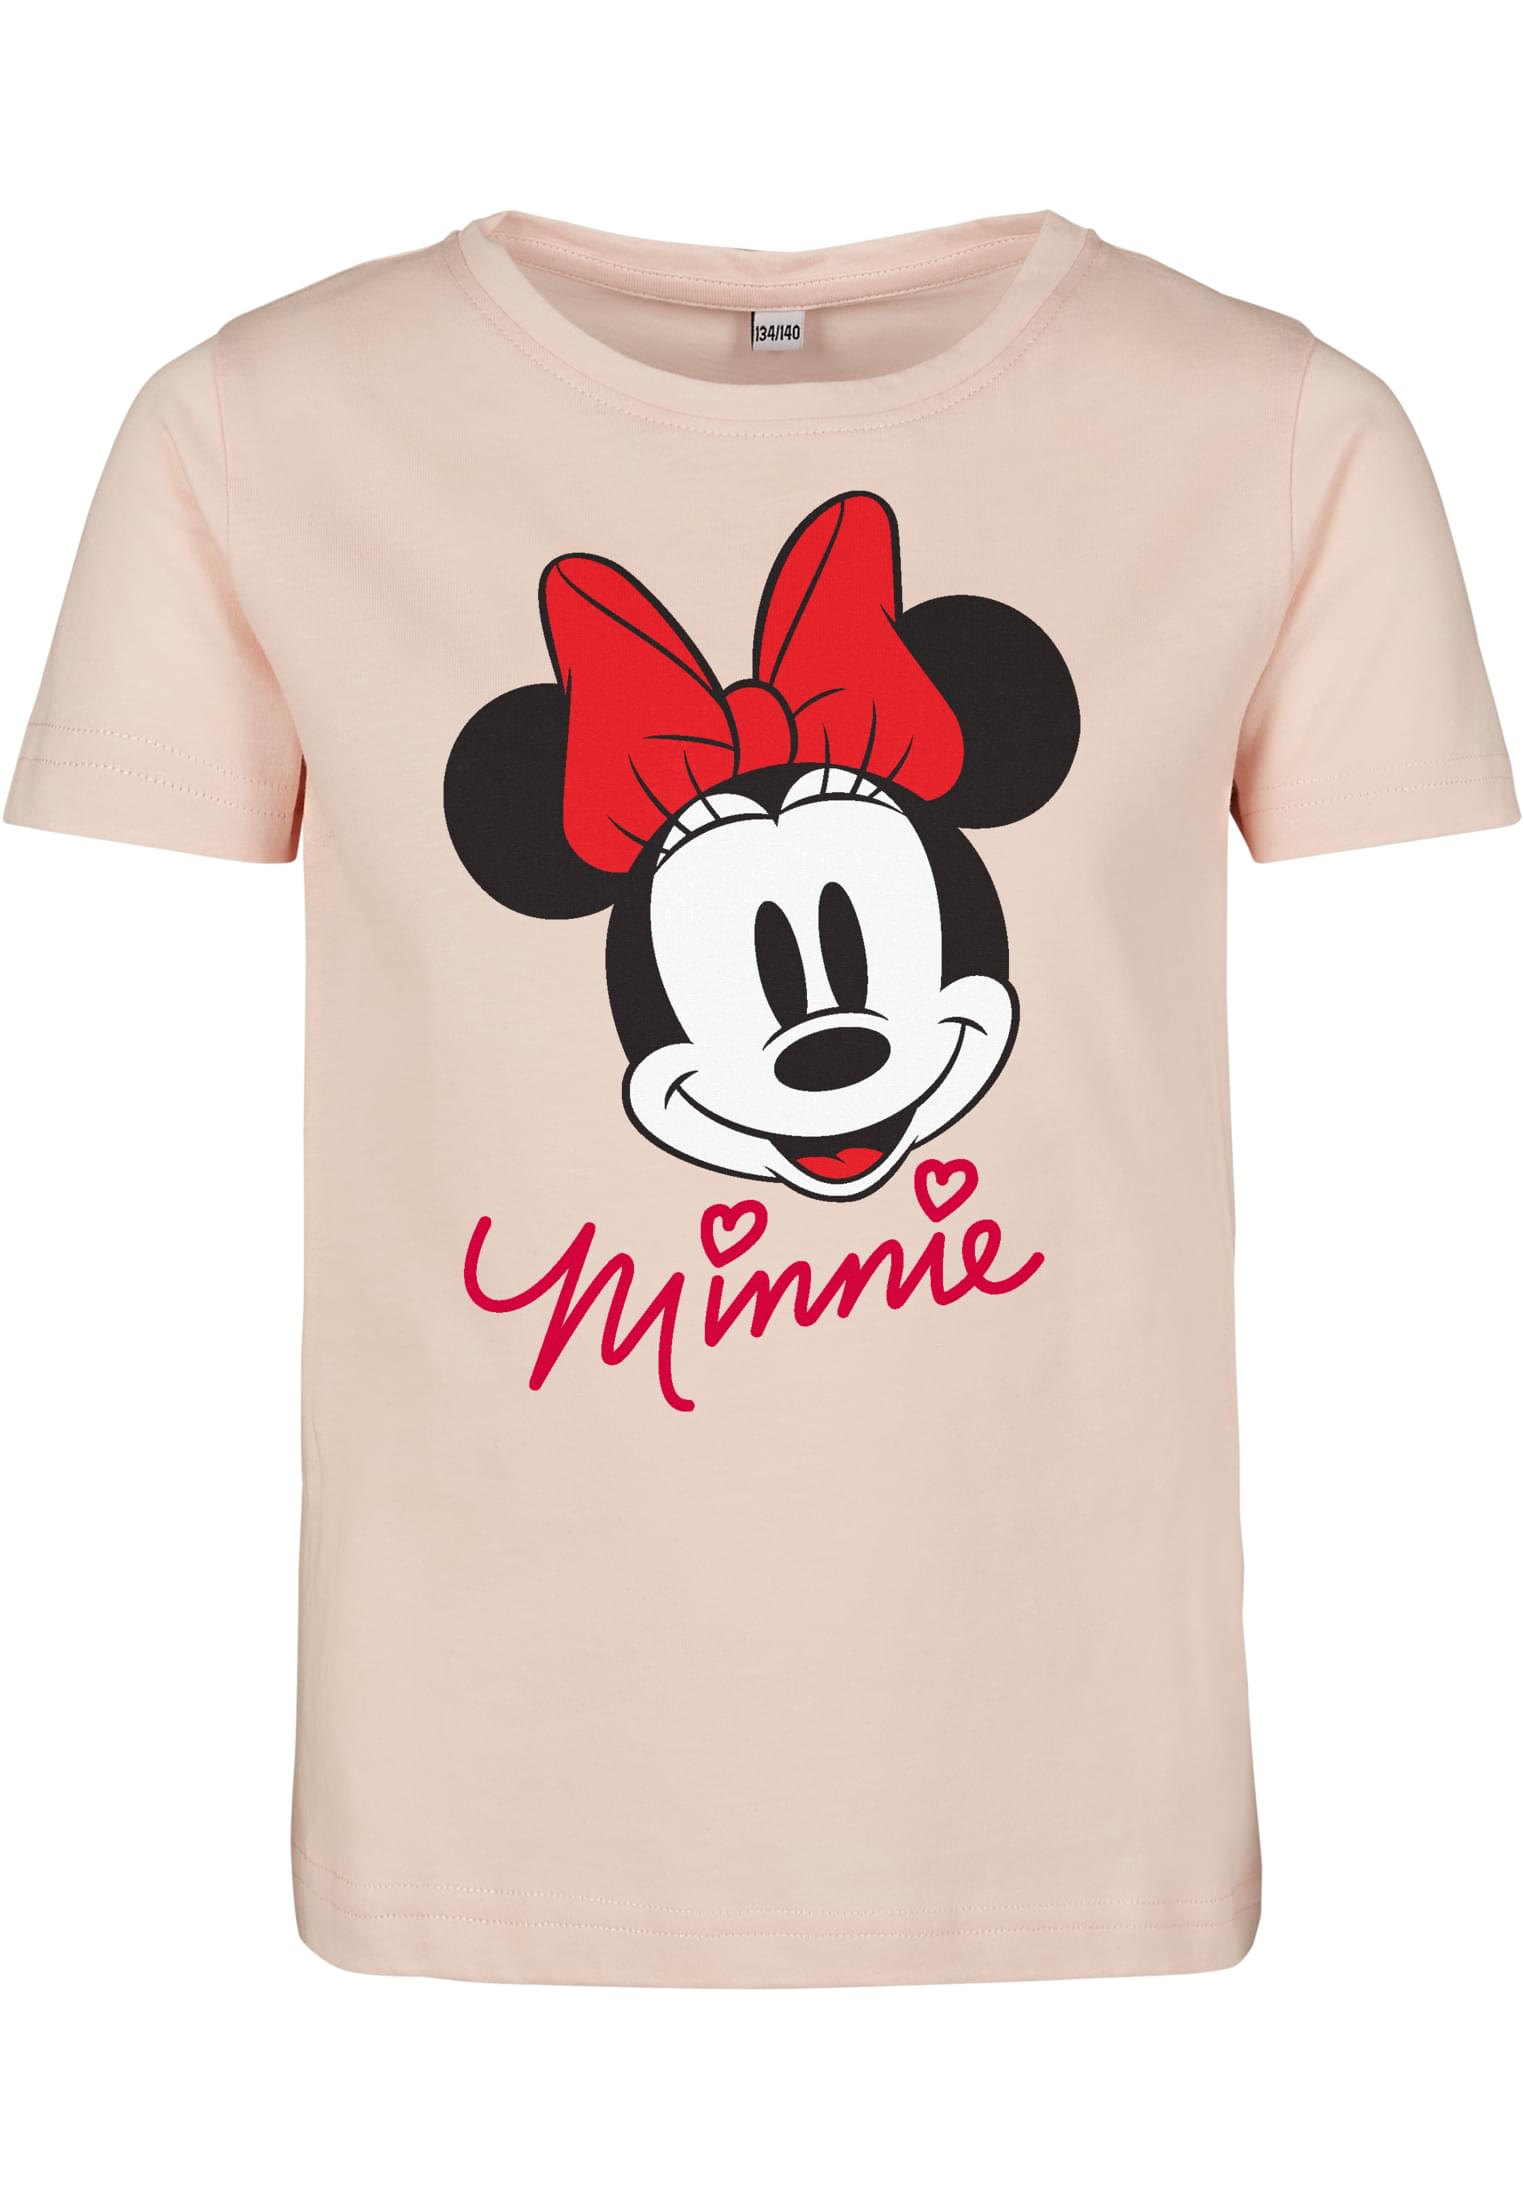 Minnie Mouse Children's T-Shirt Pink